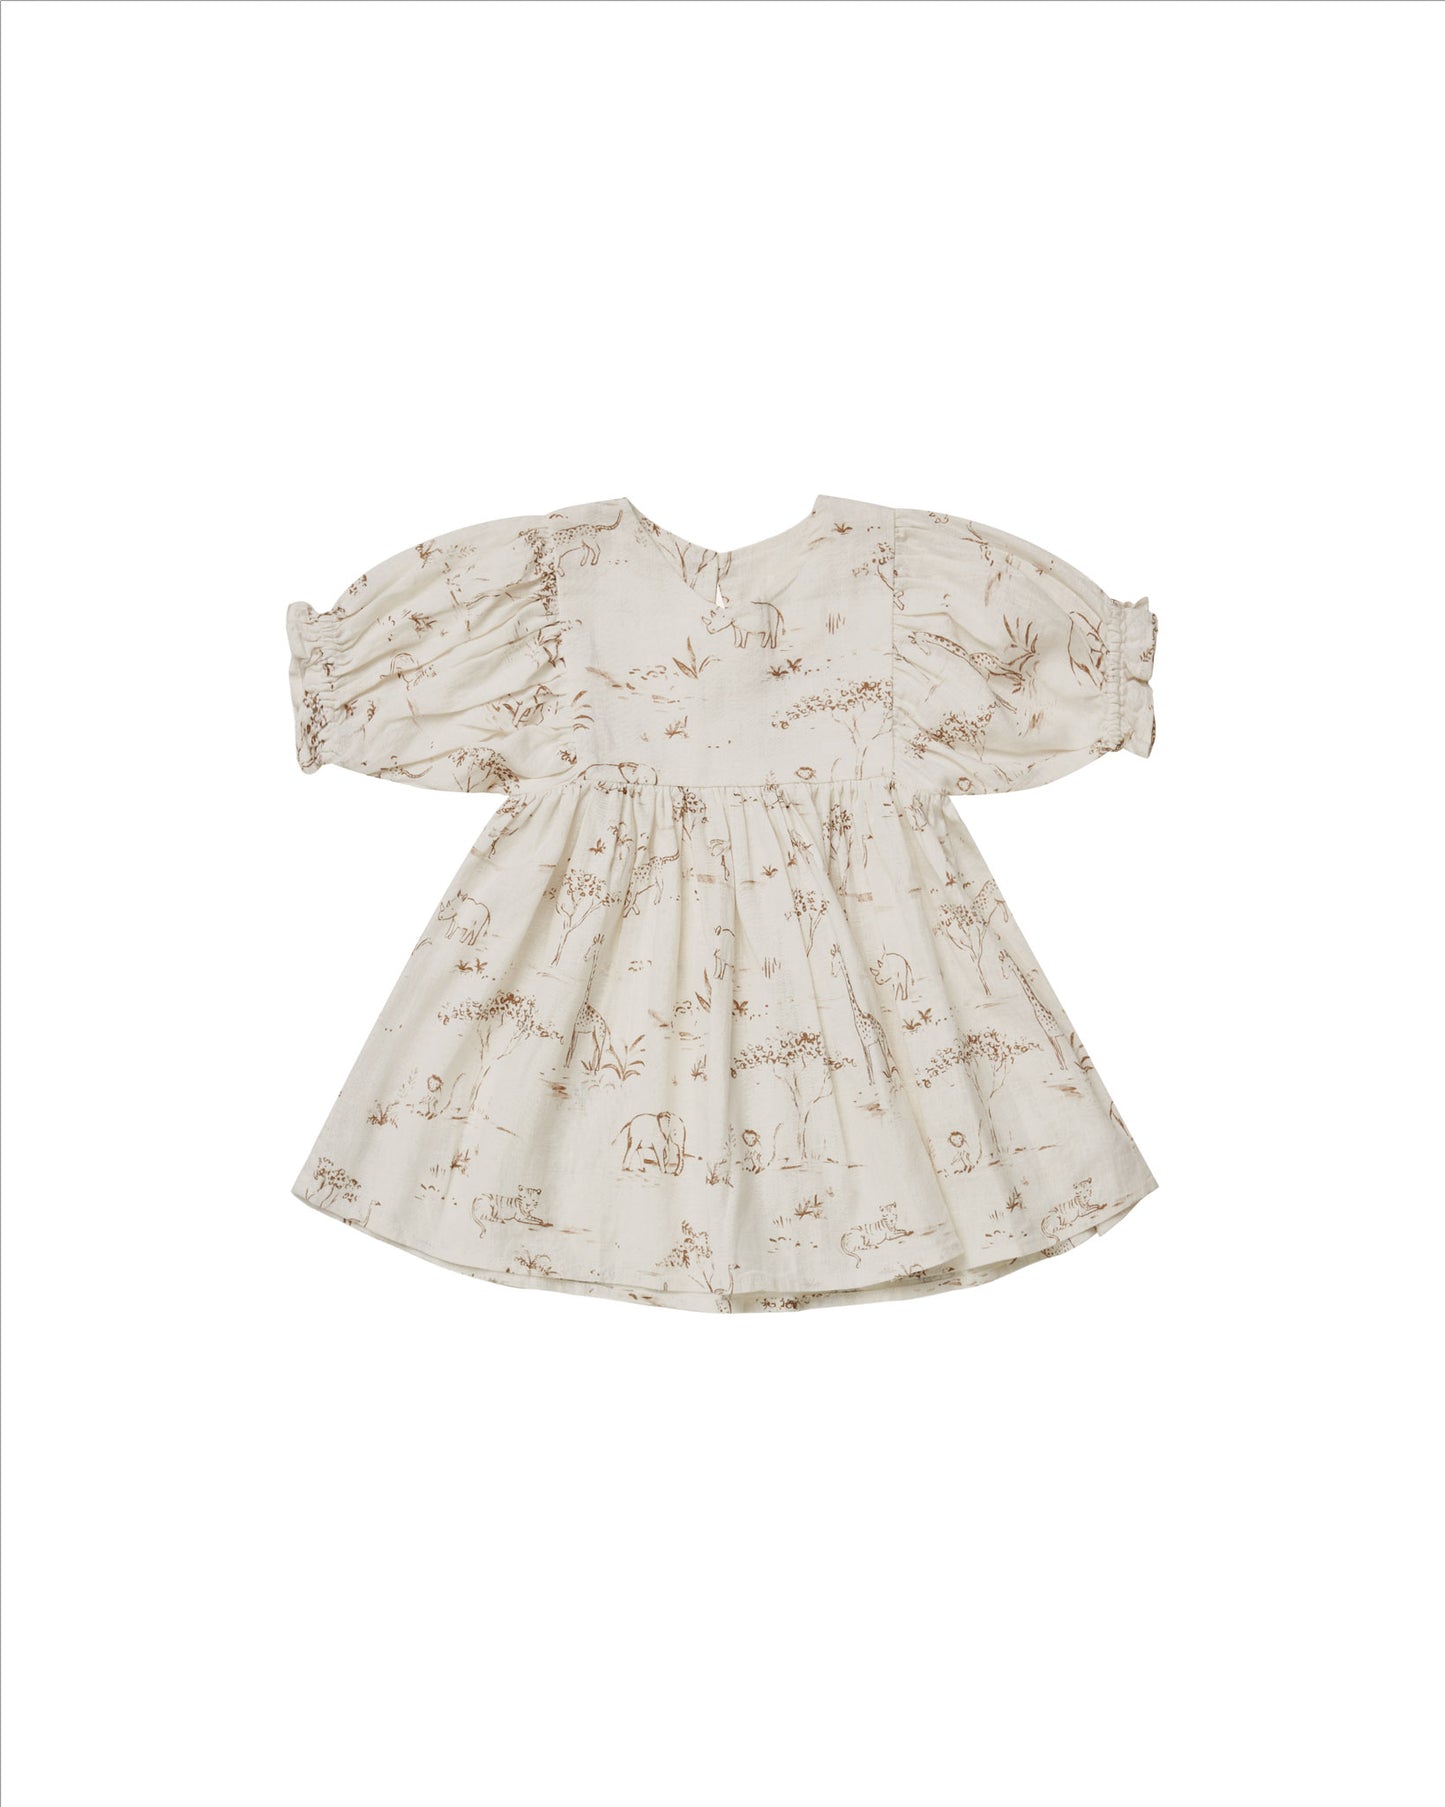 Jolene Short Sleeves Summer Dress Safari Toile Printed Ivory